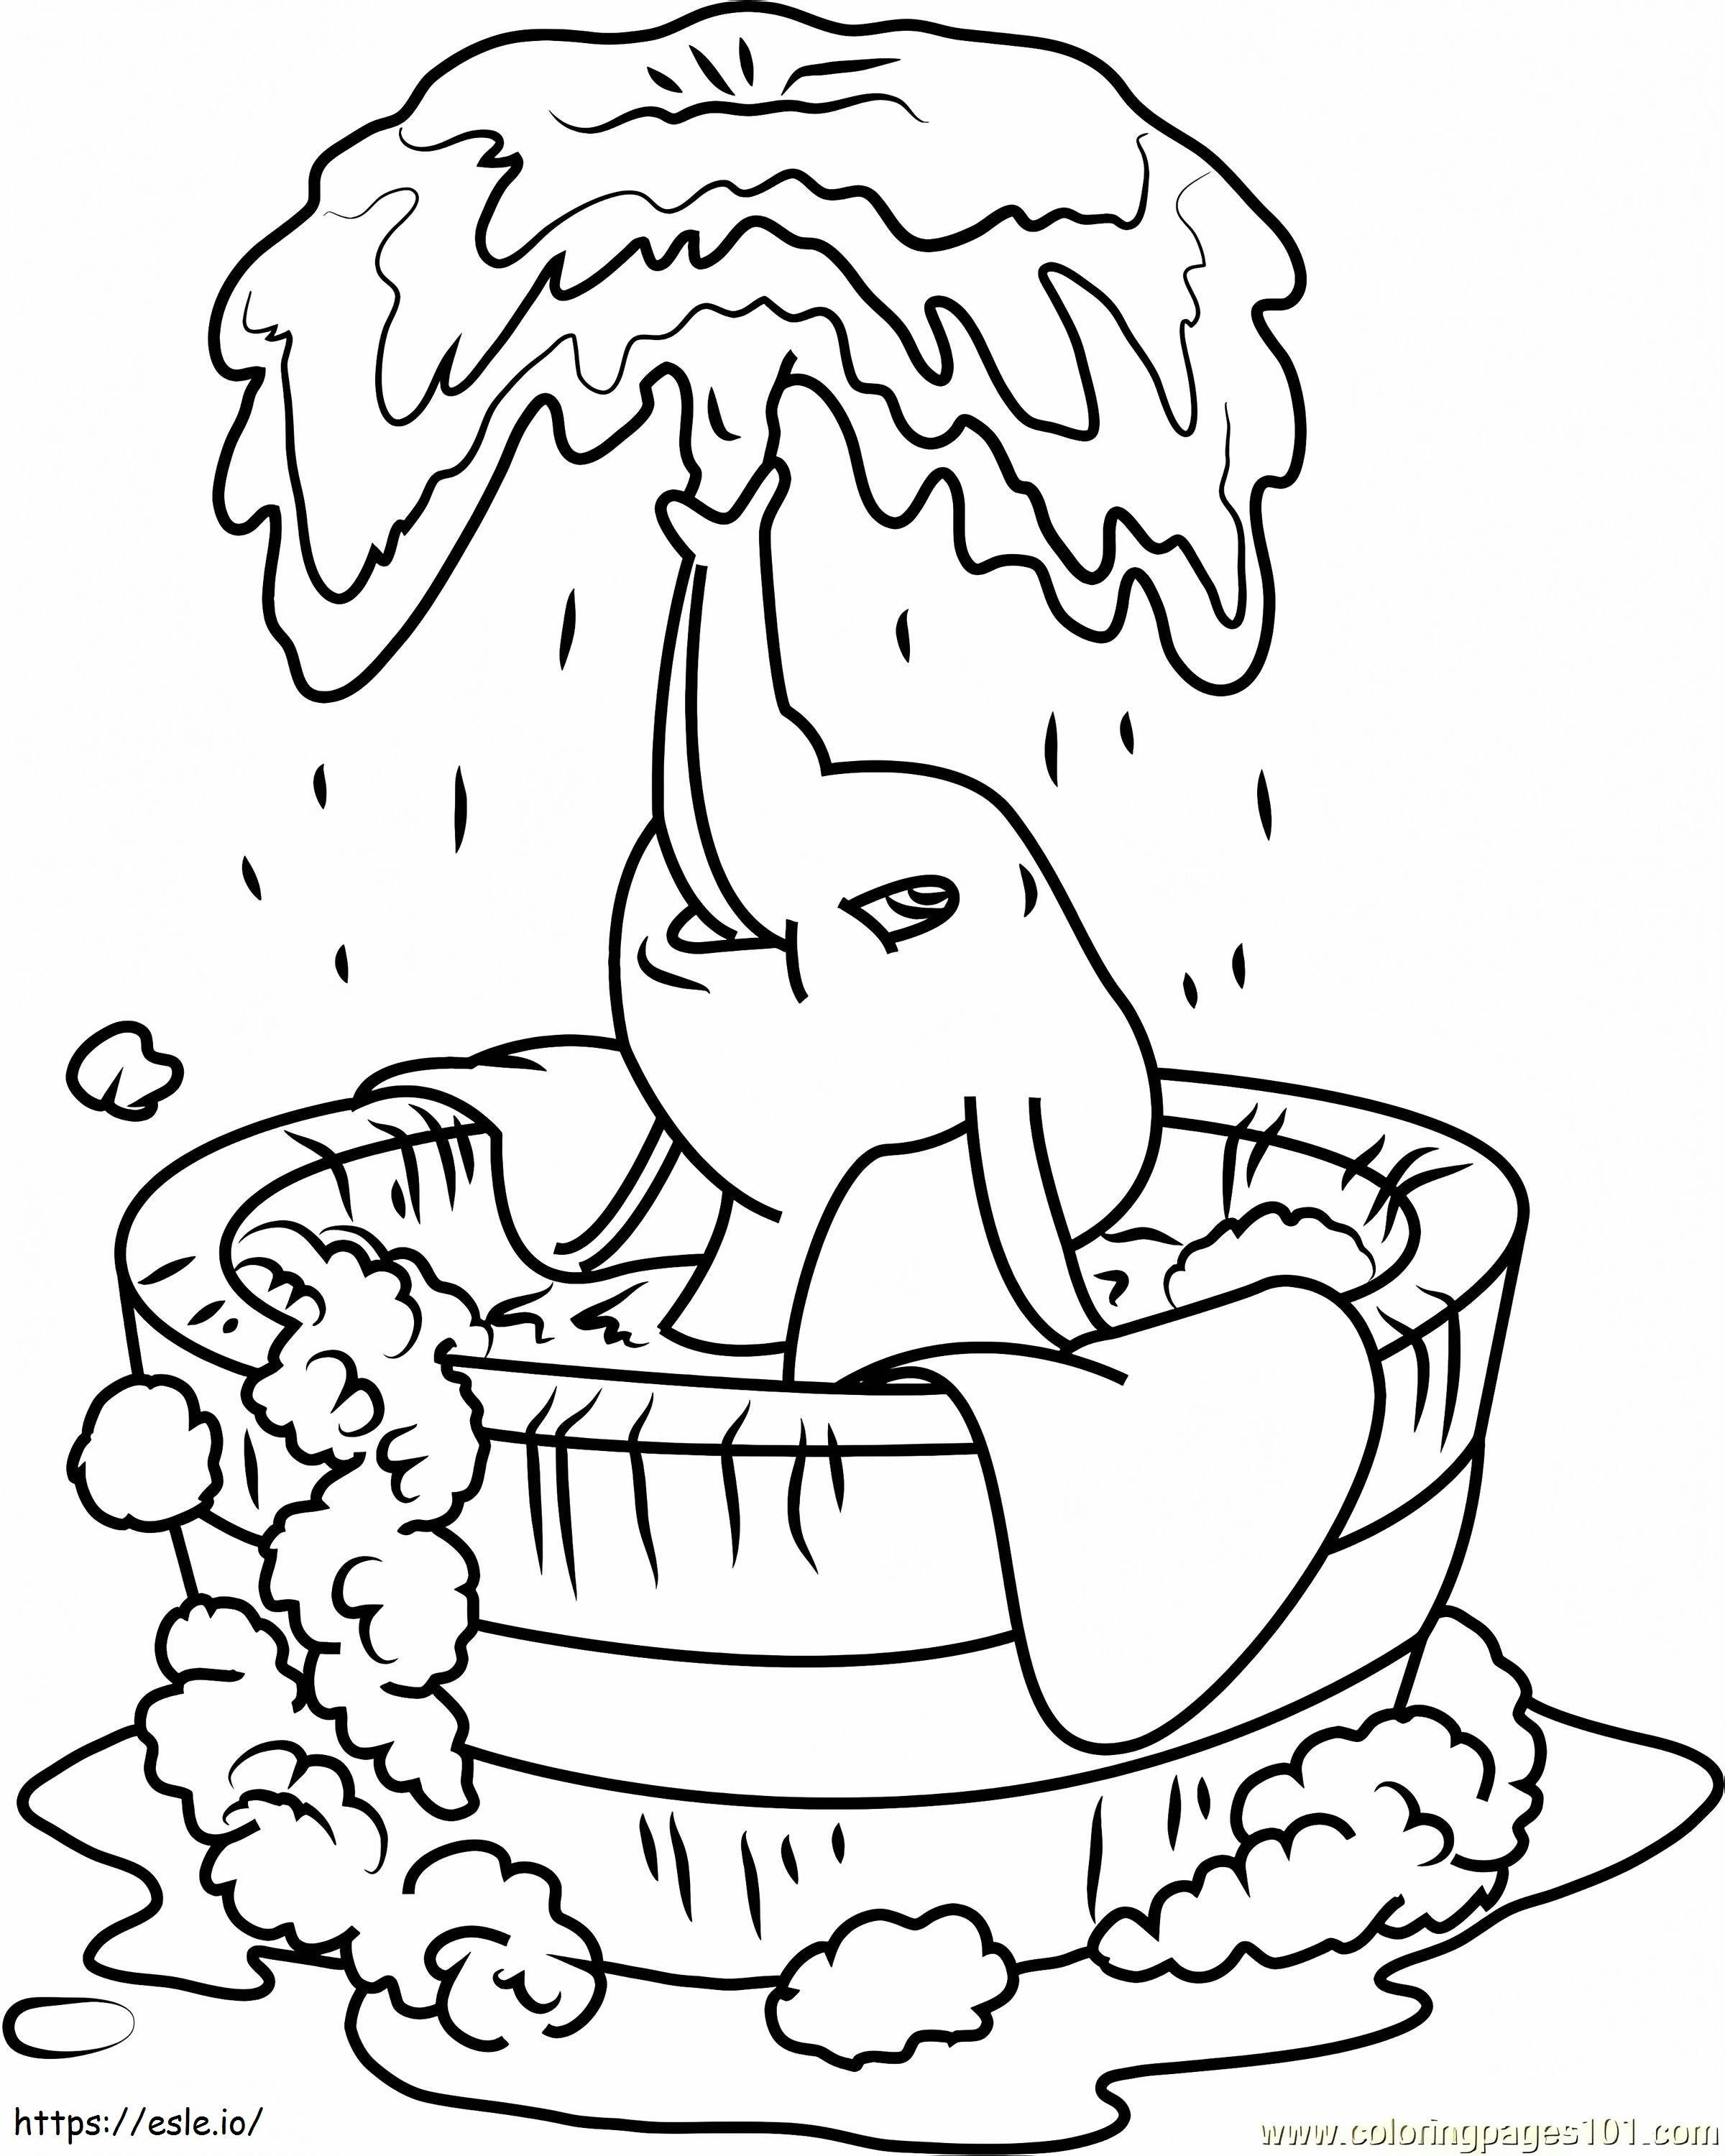 1552695720 76857 Dumbo Bath Within Dumbo coloring page